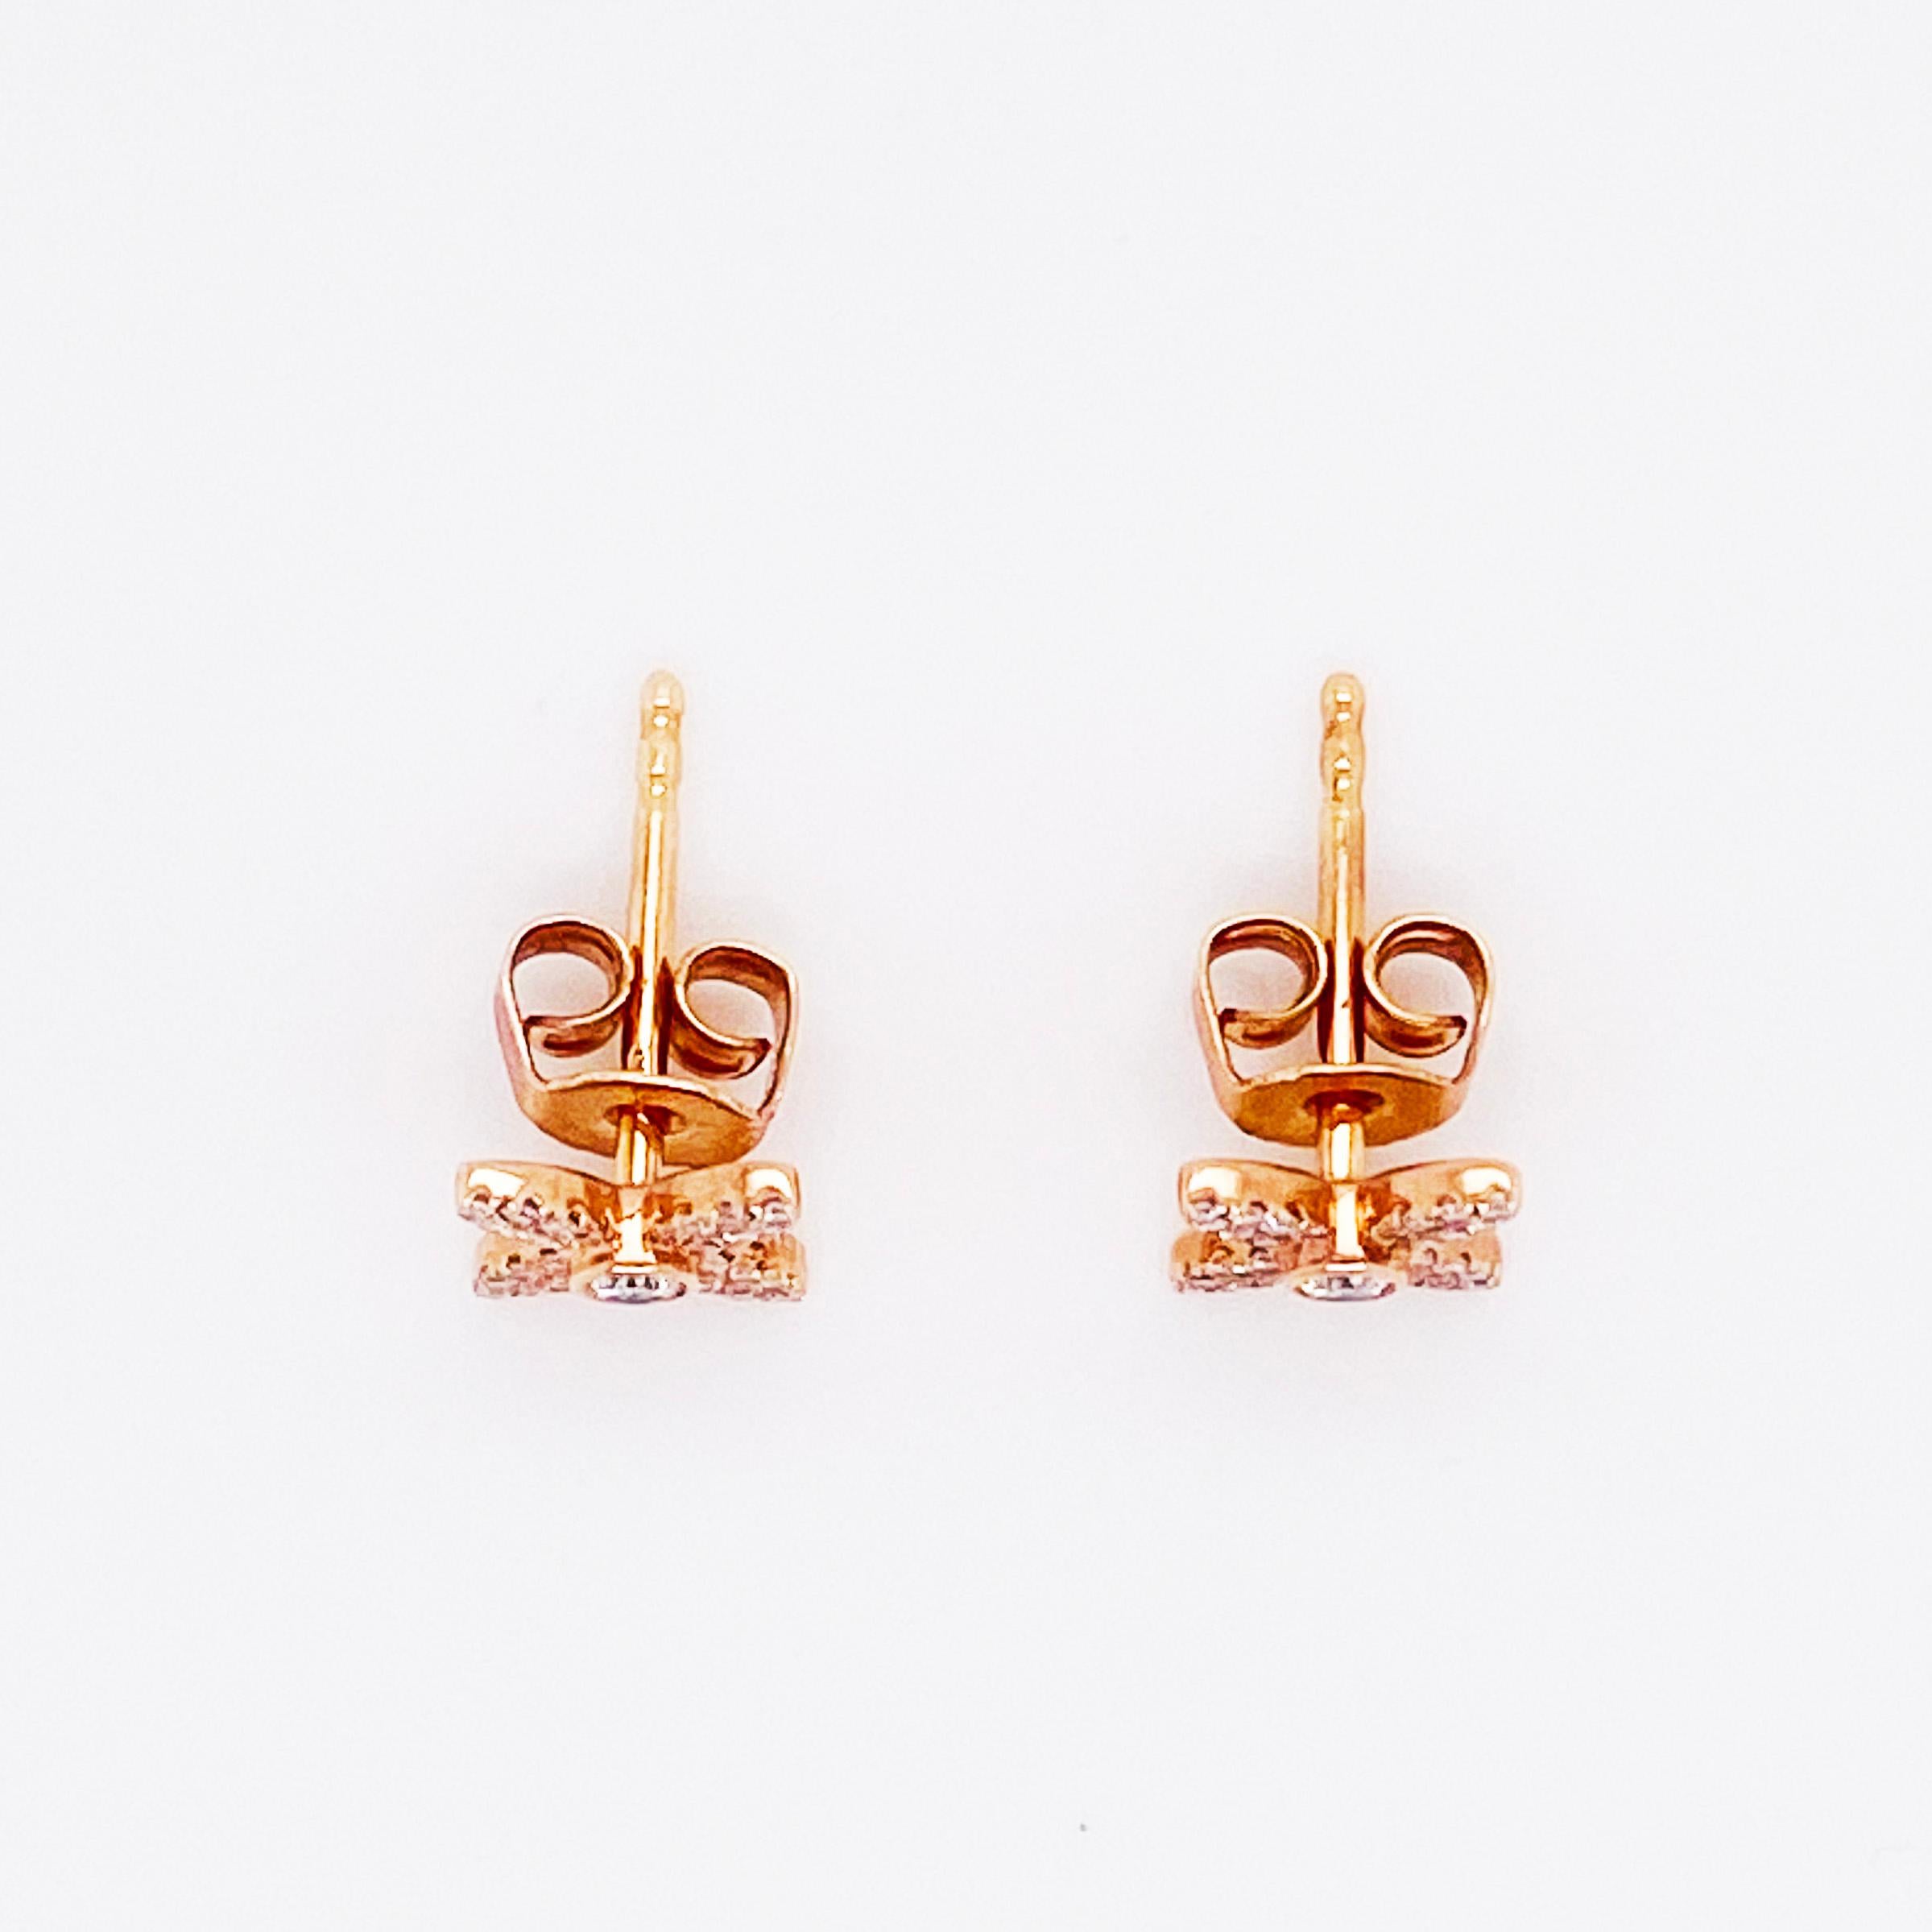 .16 carat diamond earrings